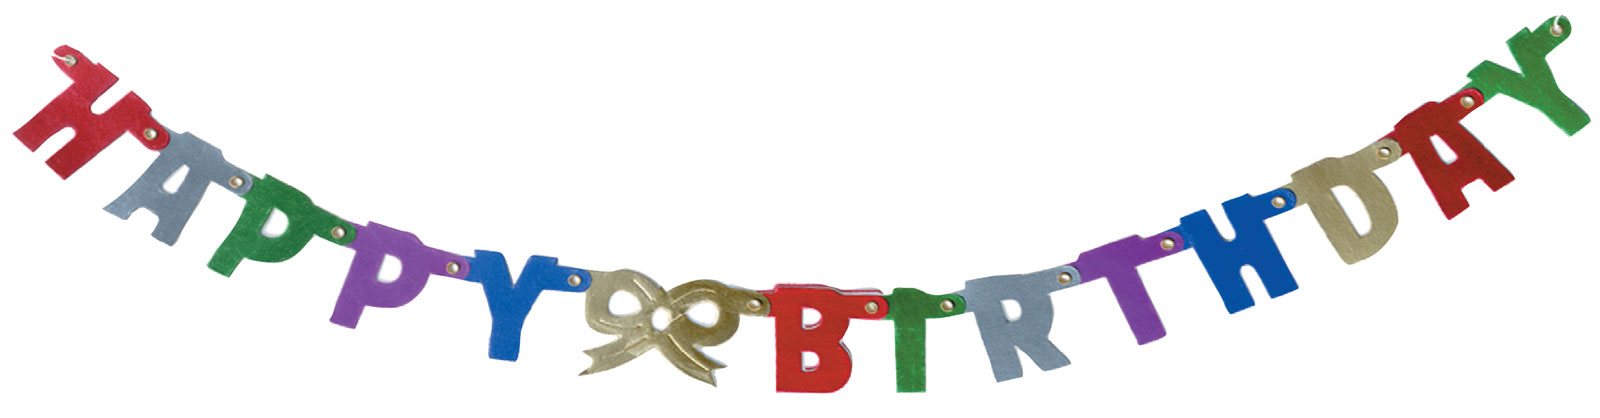 Itty Bitty Happy Birthday Banner | ThePartyWorks